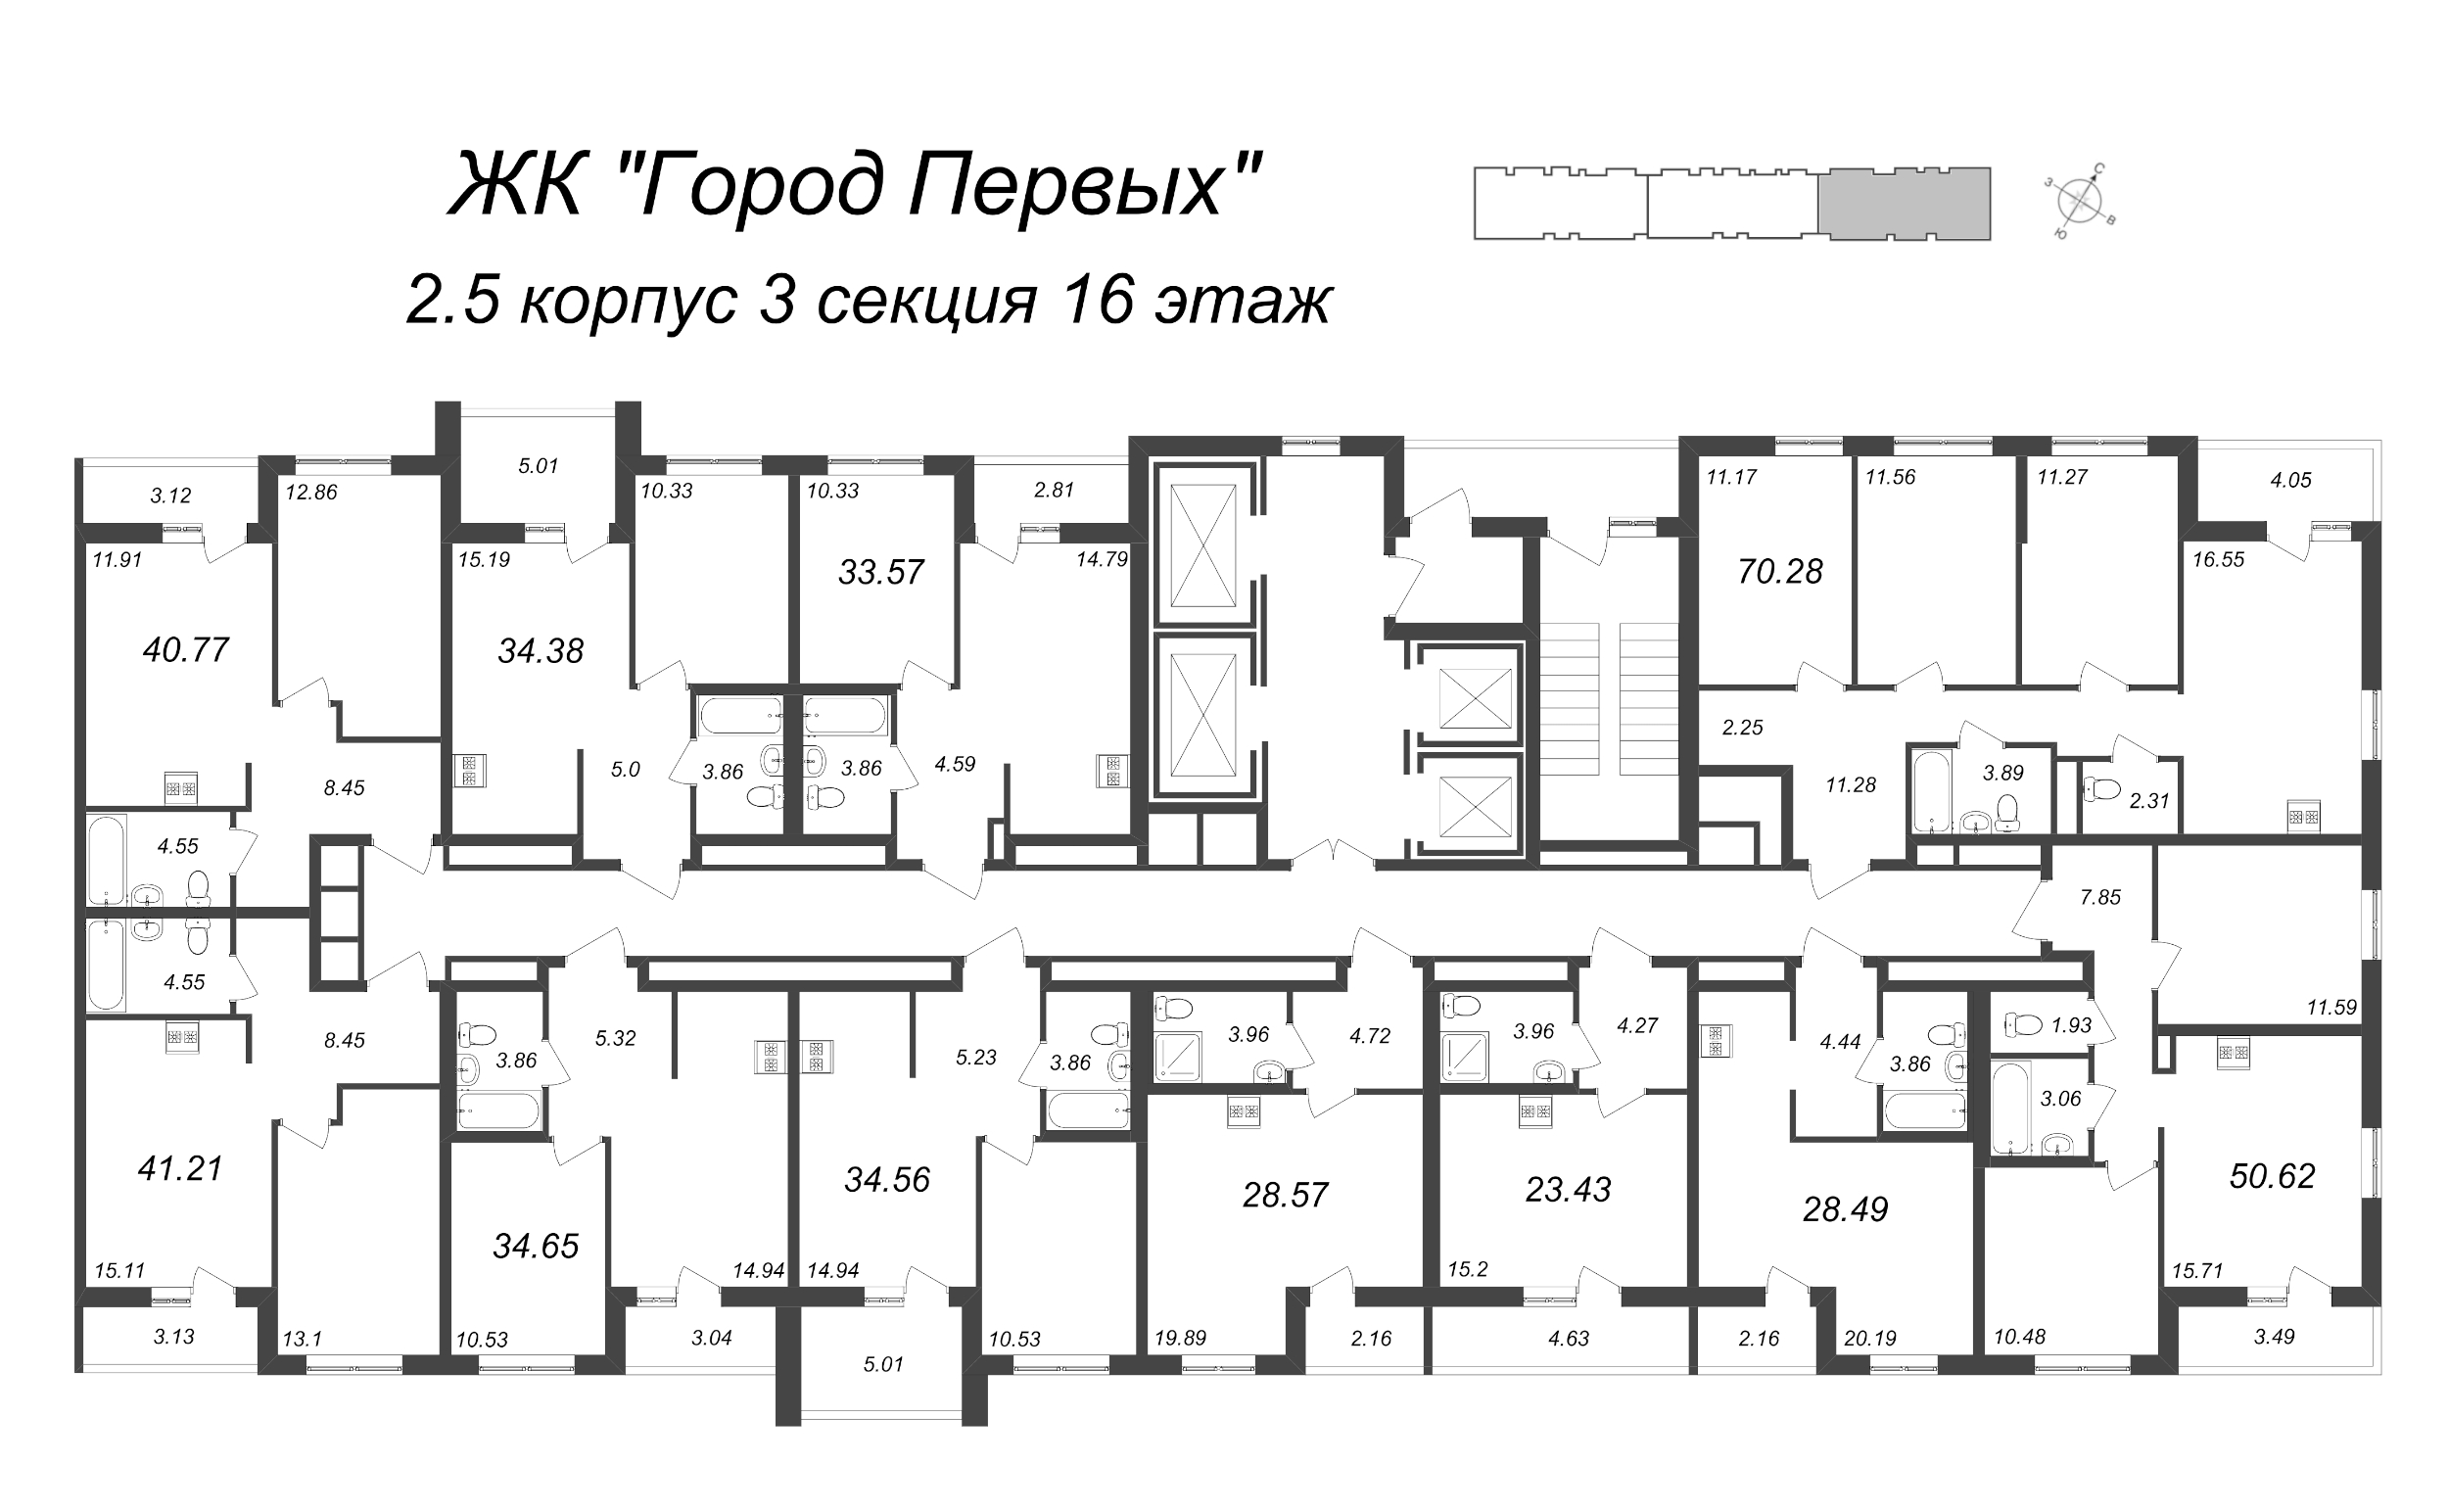 2-комнатная (Евро) квартира, 37.87 м² - планировка этажа